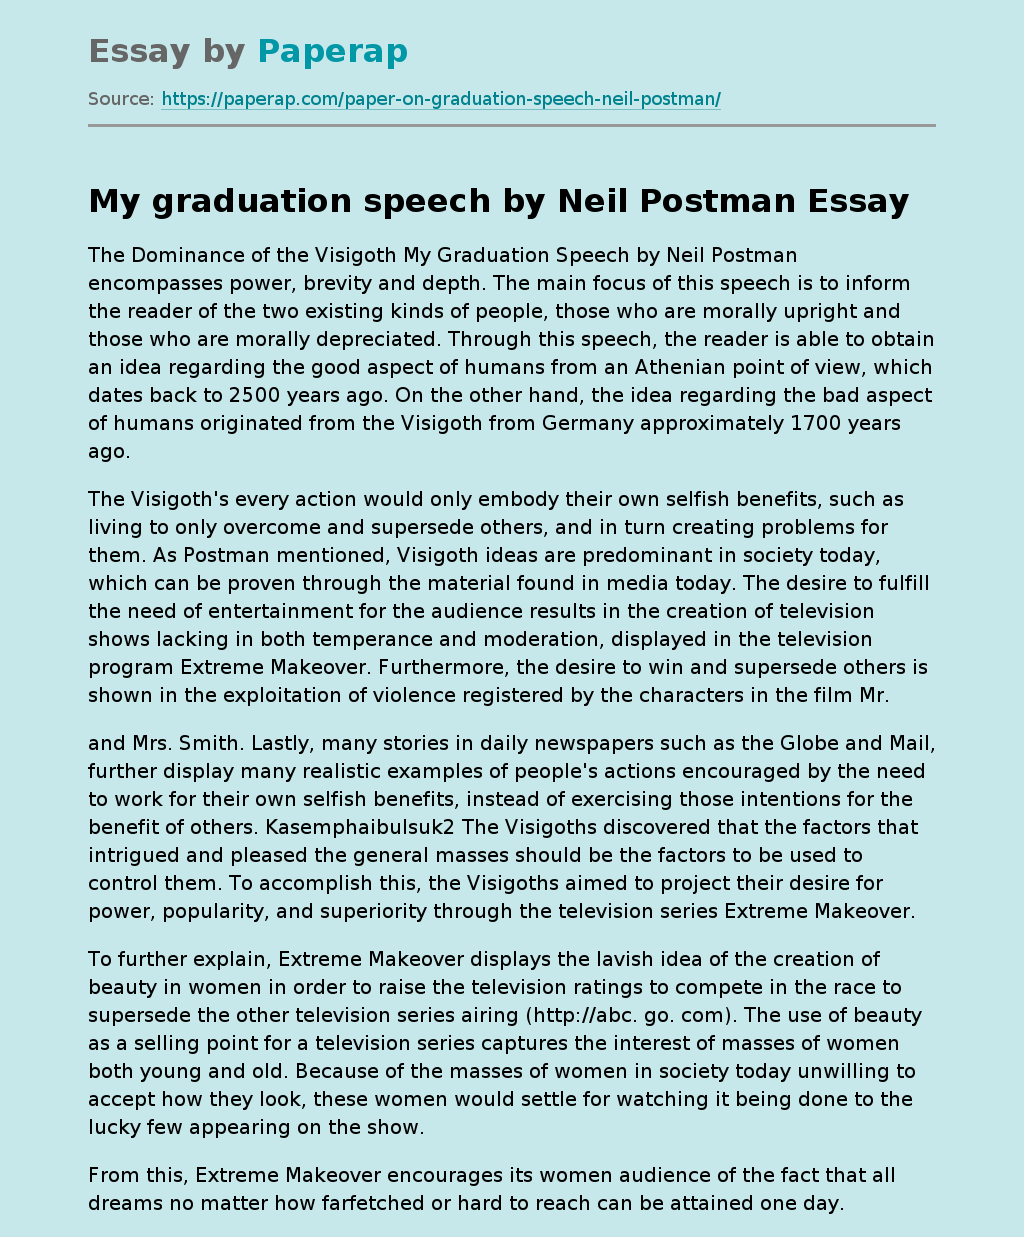 My graduation speech by Neil Postman